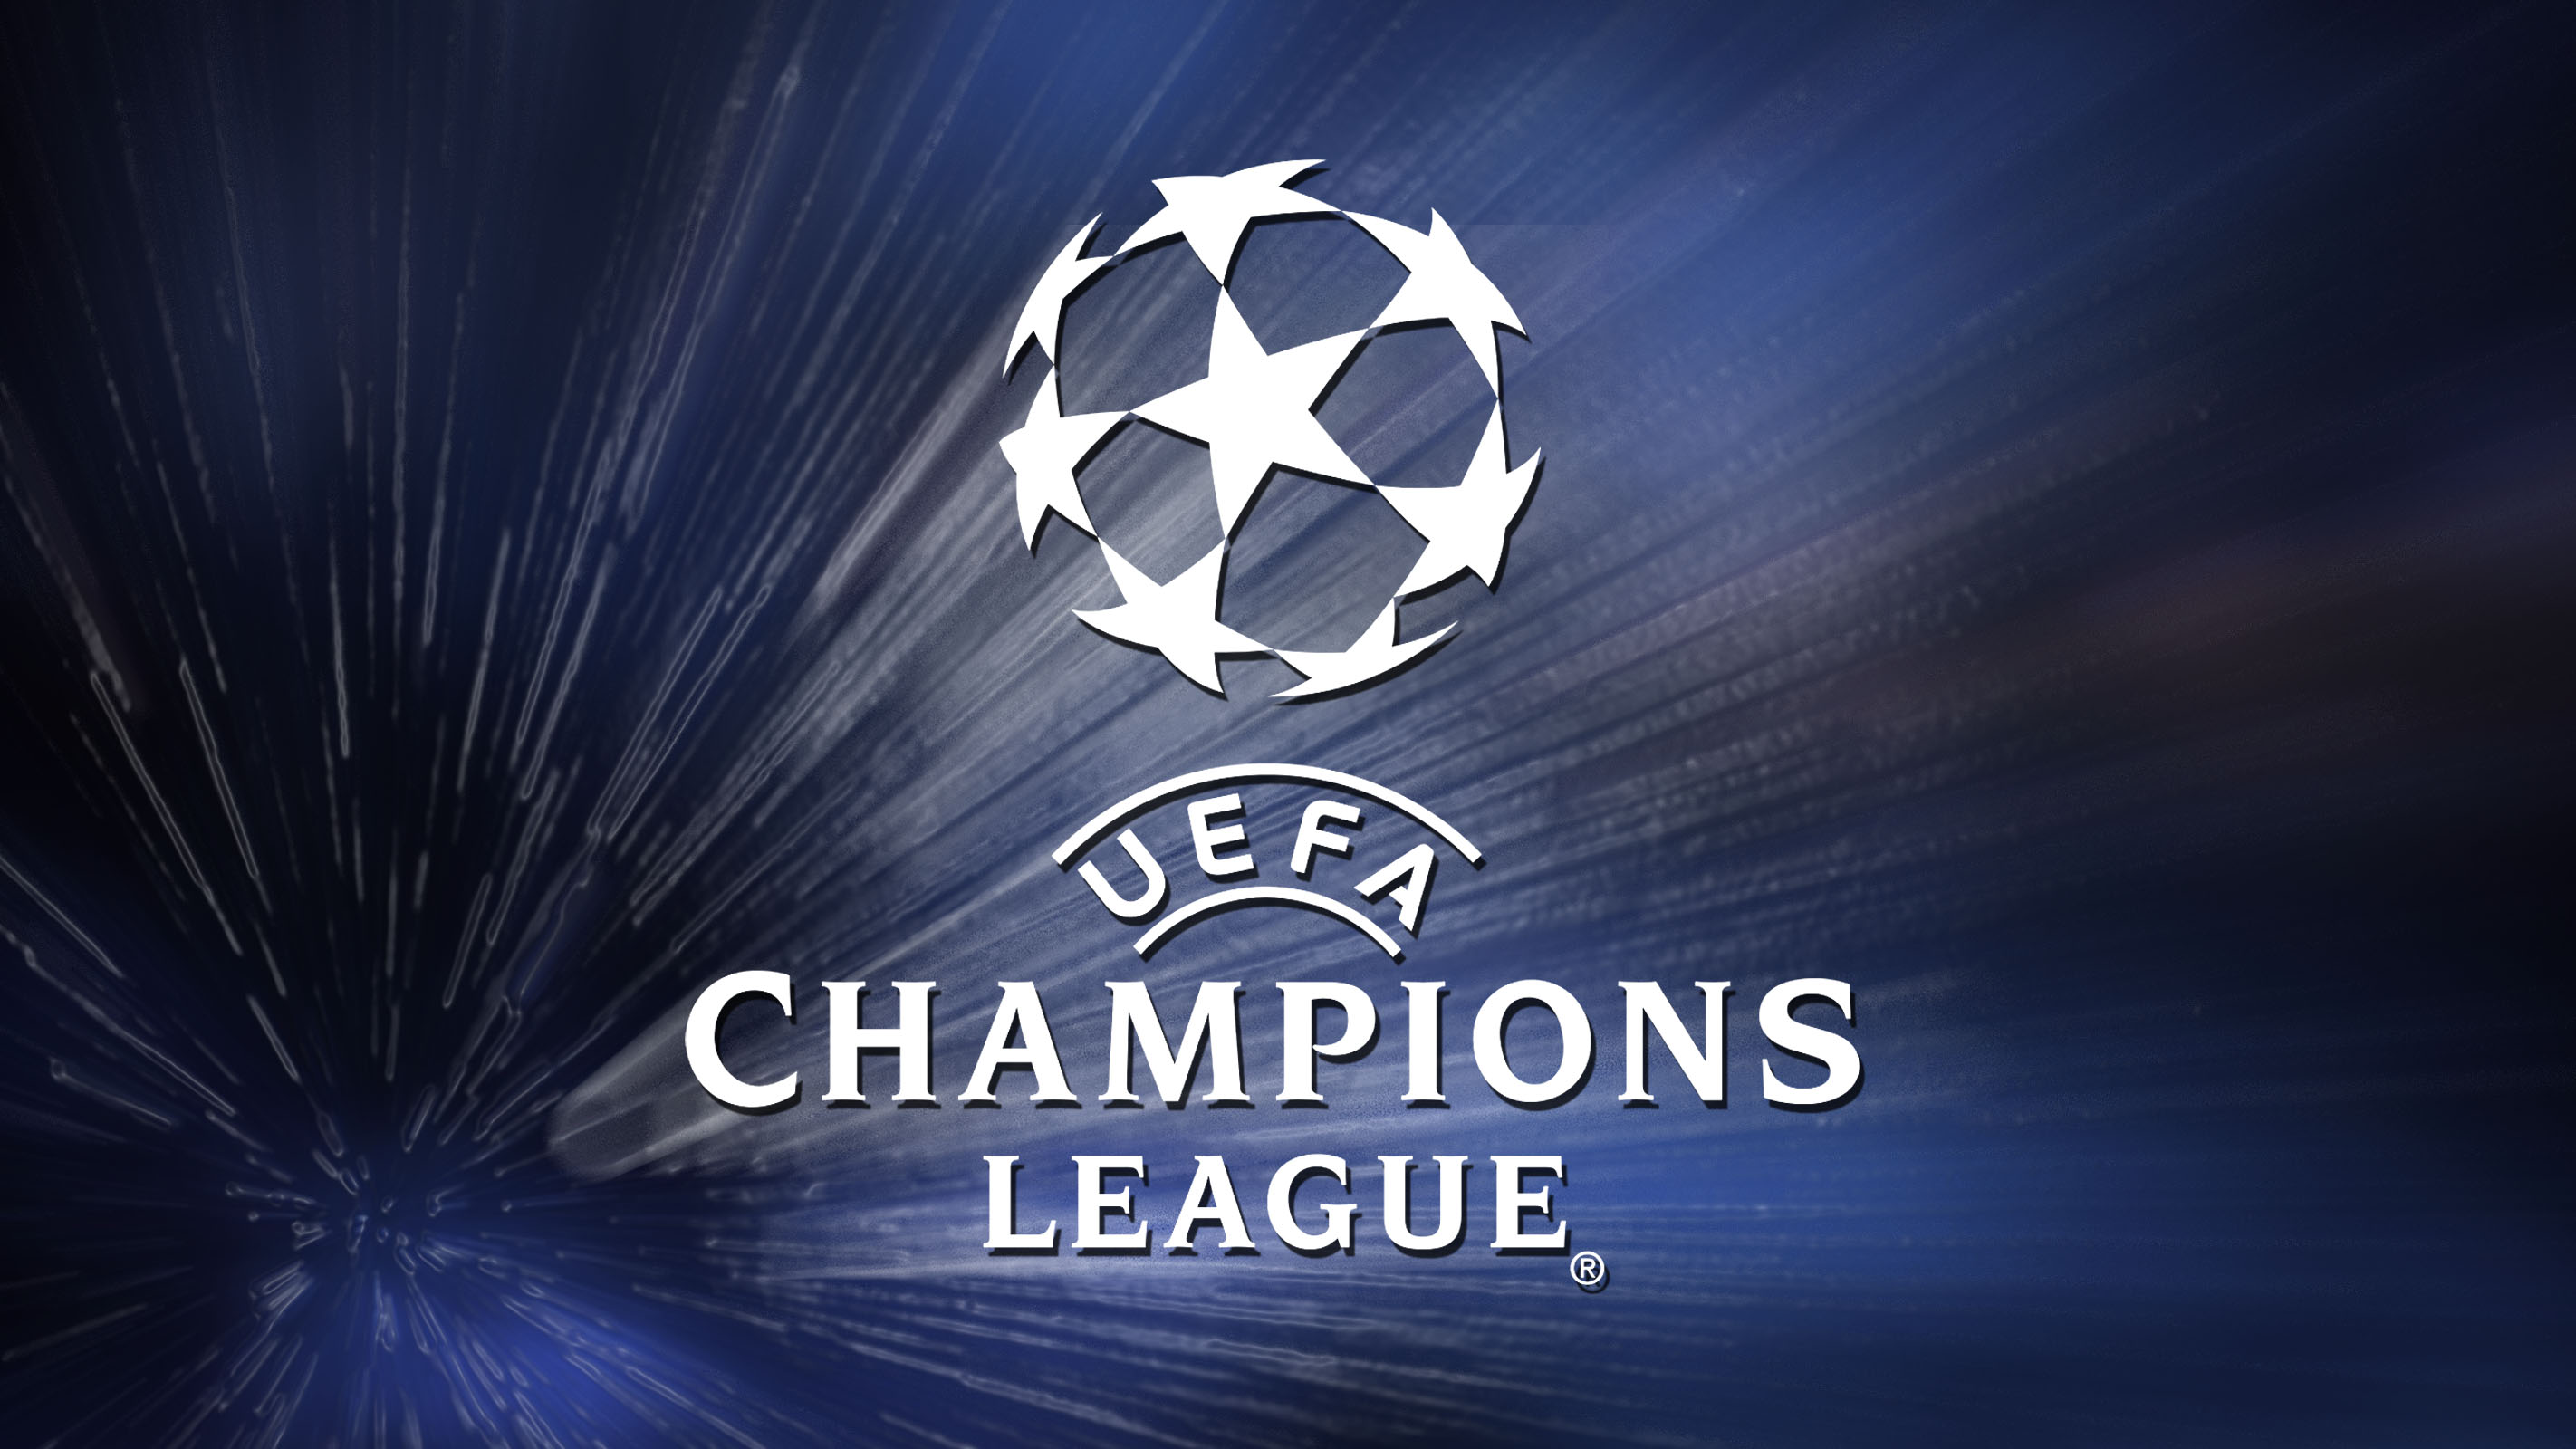 Champions League, UEFA Champions League, tứ kết C1, luật bốc thăm C1, thay đổi luật bốc thăm C1. c1, champions League